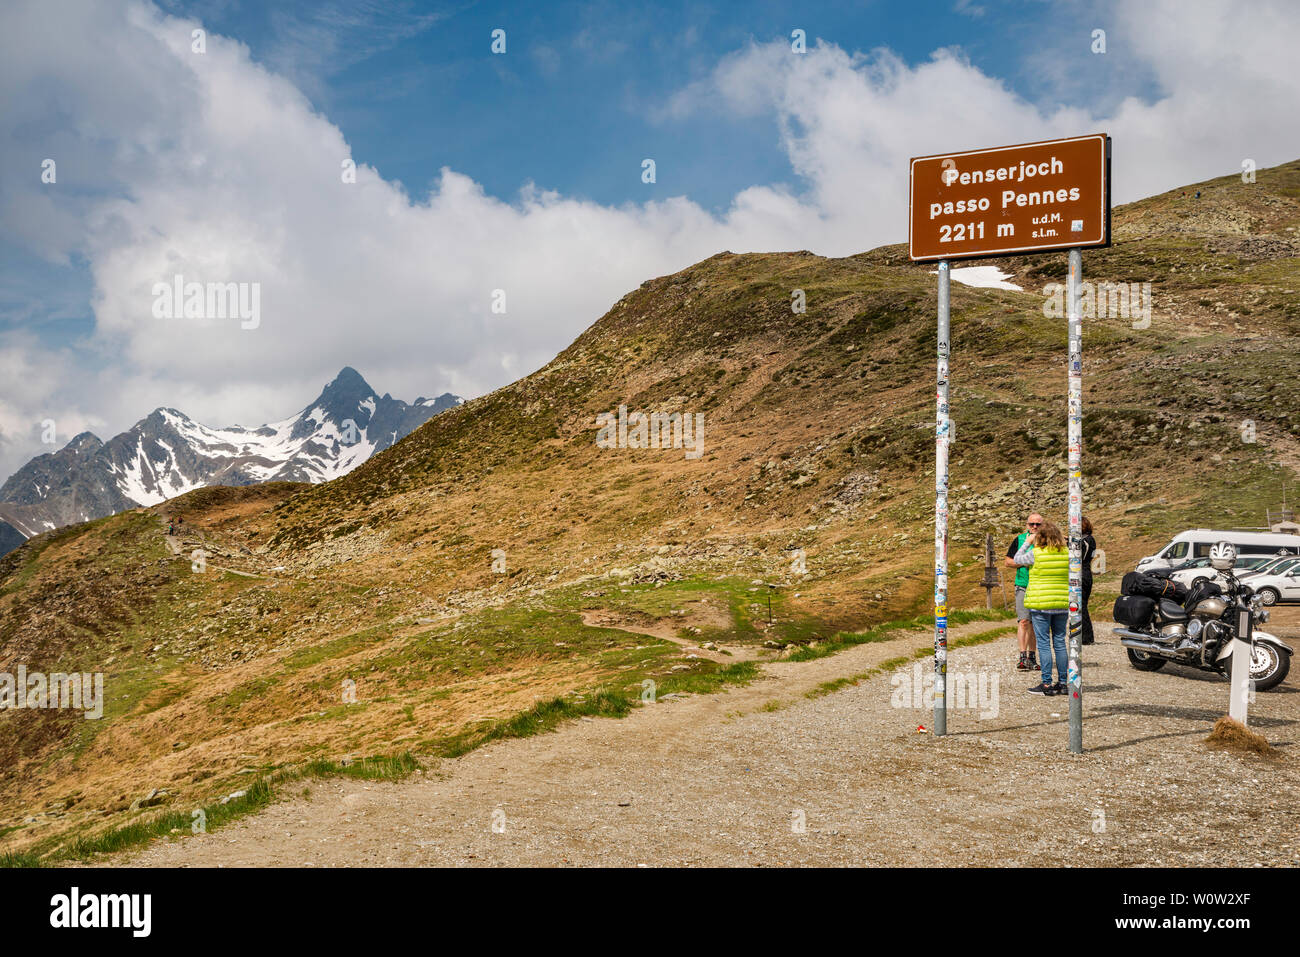 Tourists at Passo Pennes (Penserjoch), Etschenspitze massif in distance, Sarntal Alps, Trentino-Alto Adige, Italy Stock Photo